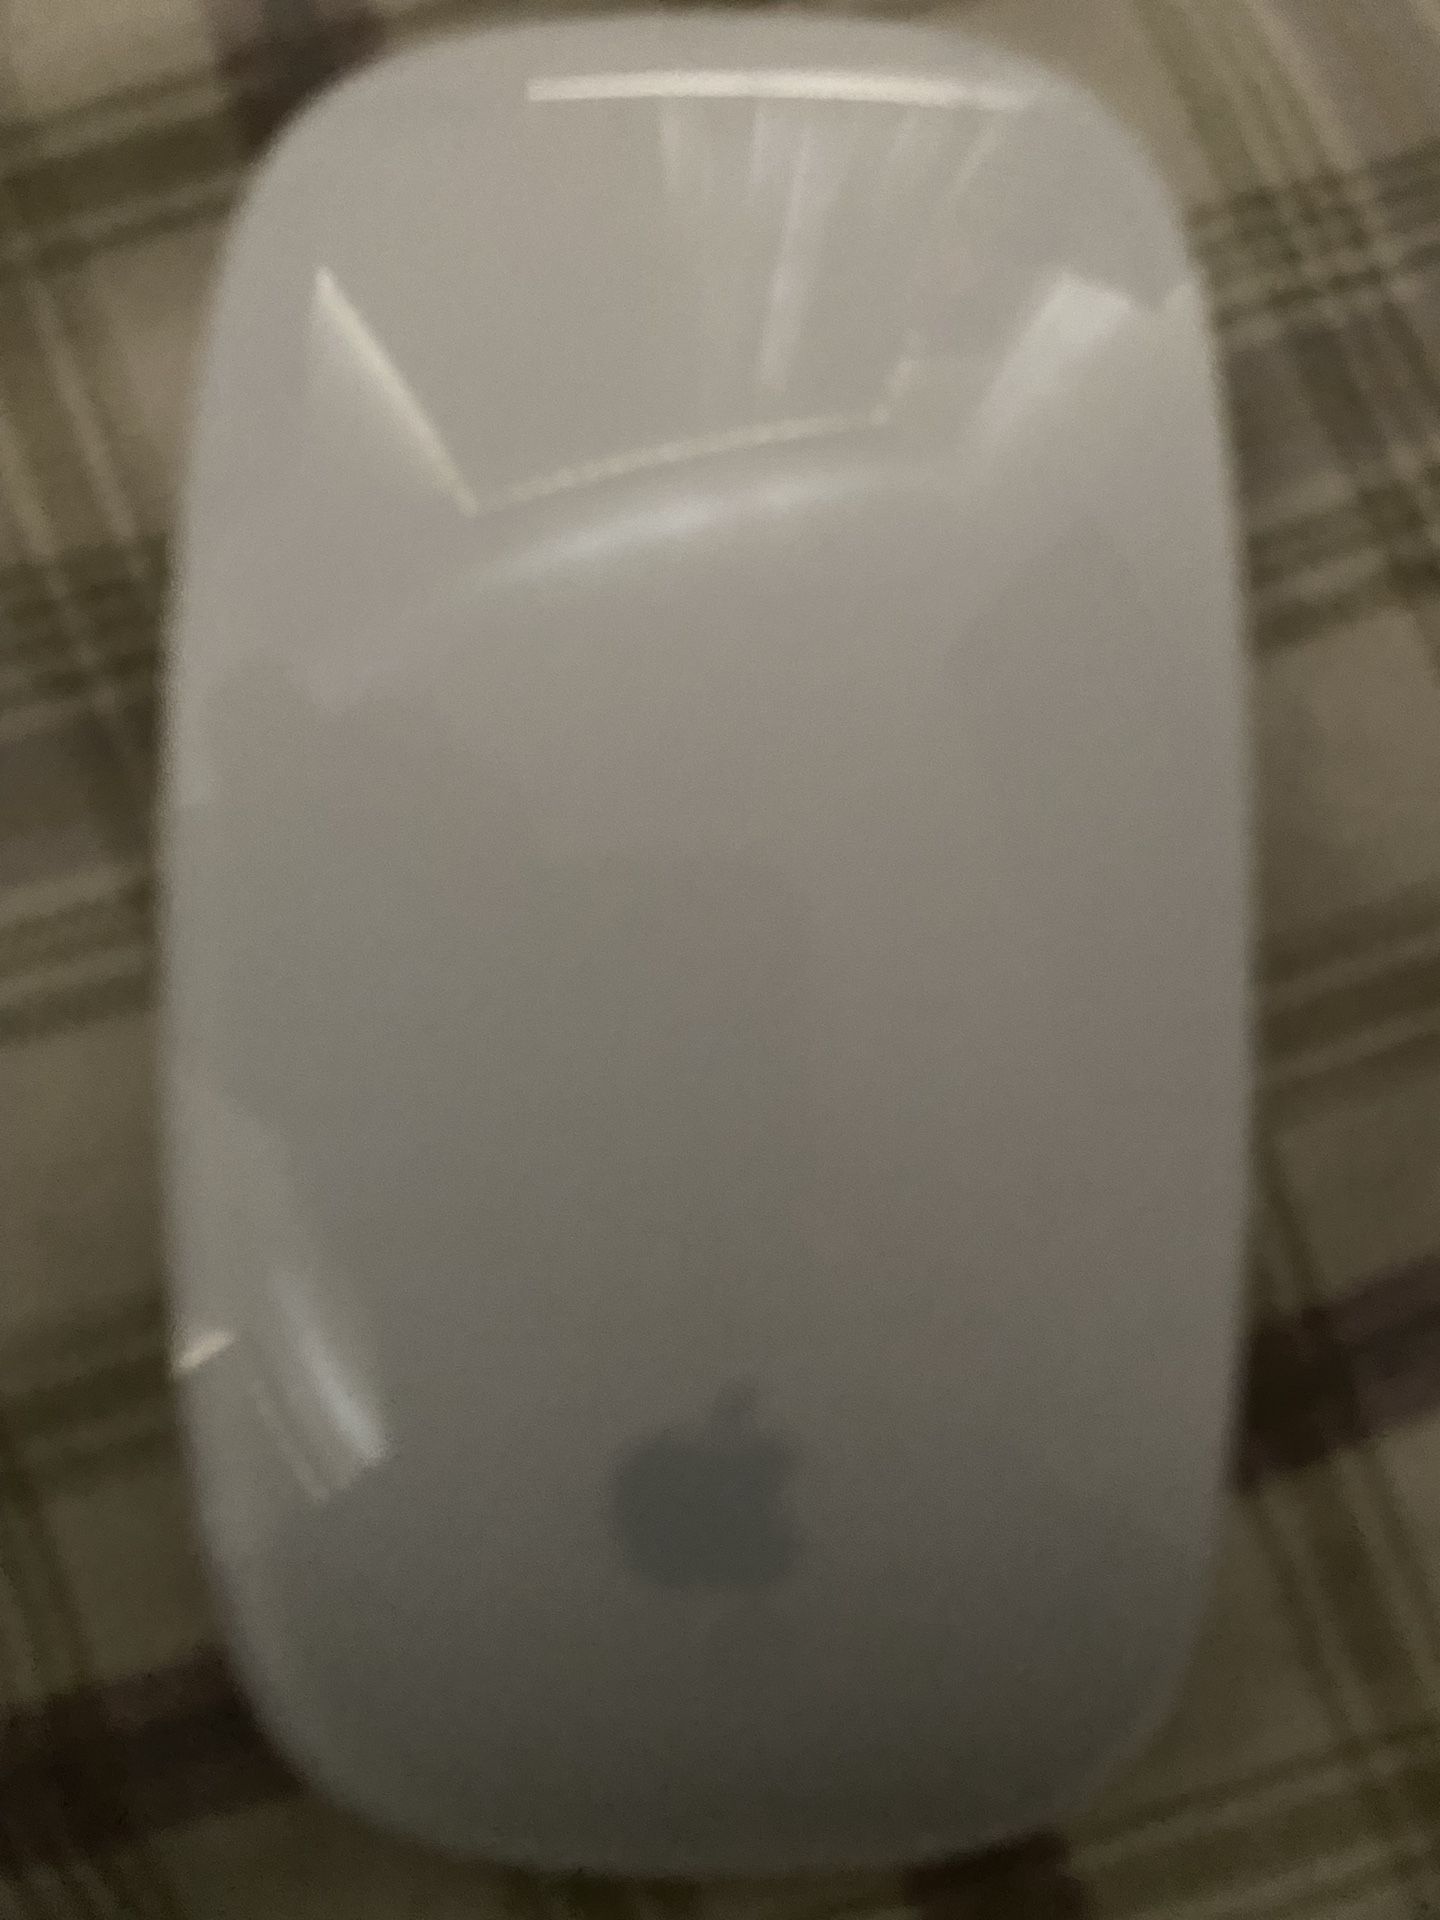 Apple Magic Mouse Wireless 